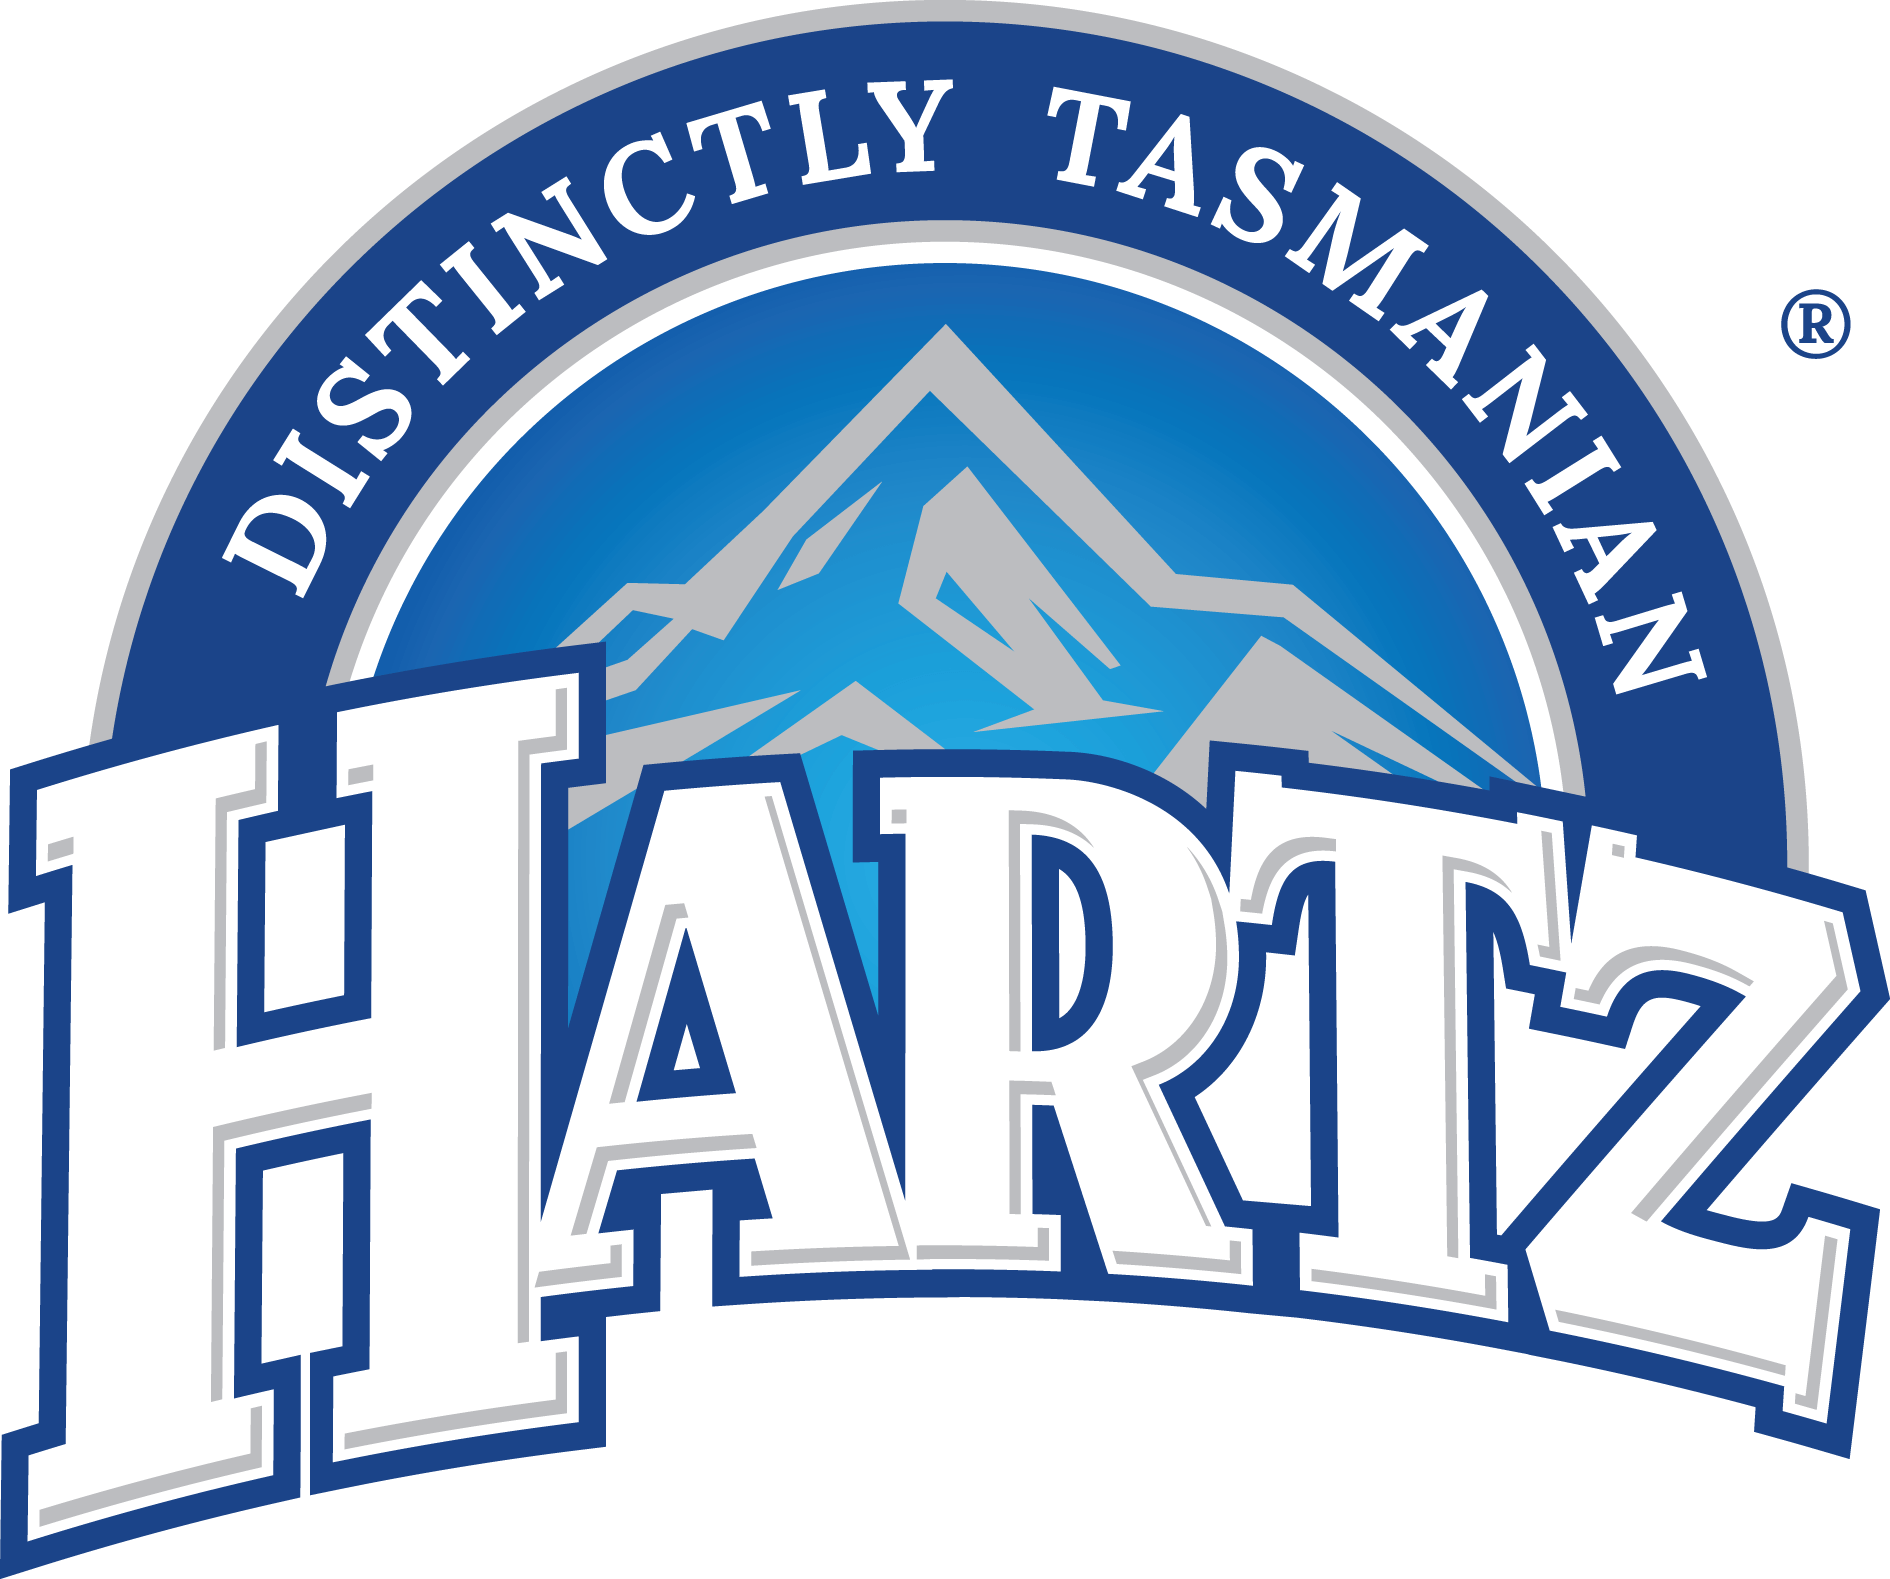 Hartz water sponsoring City to Casino fun run